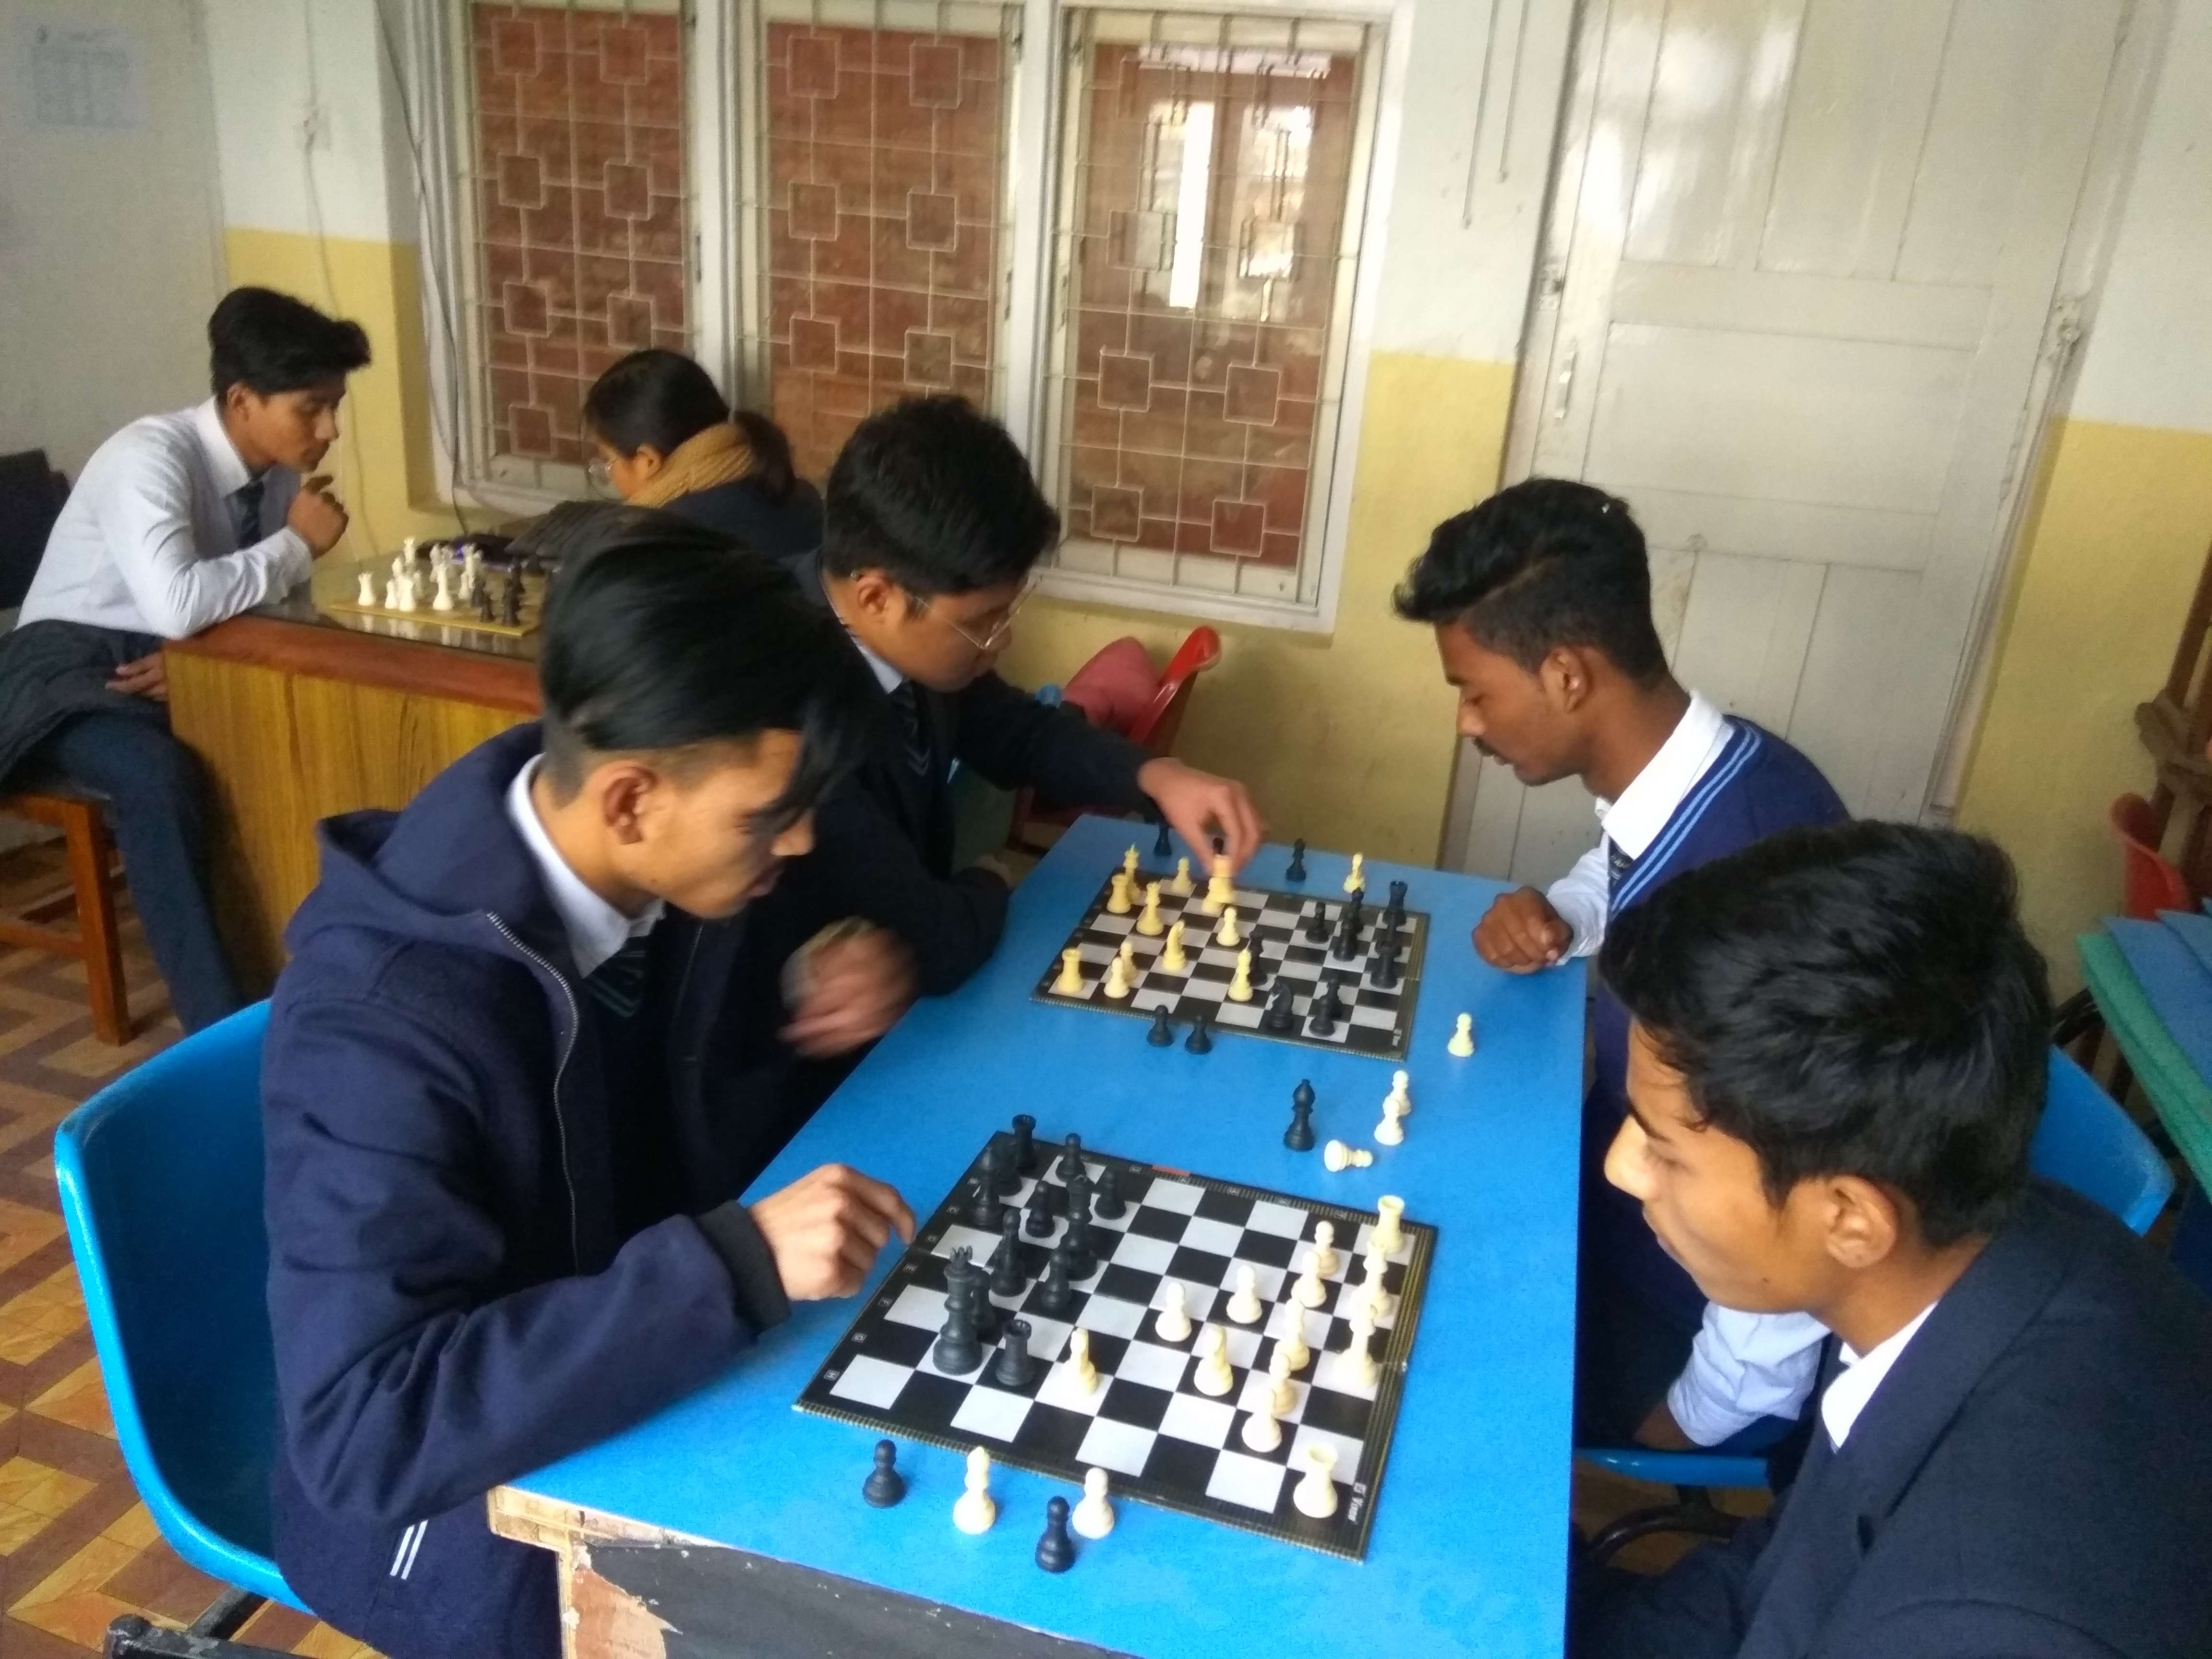 Campion Kathmandu School